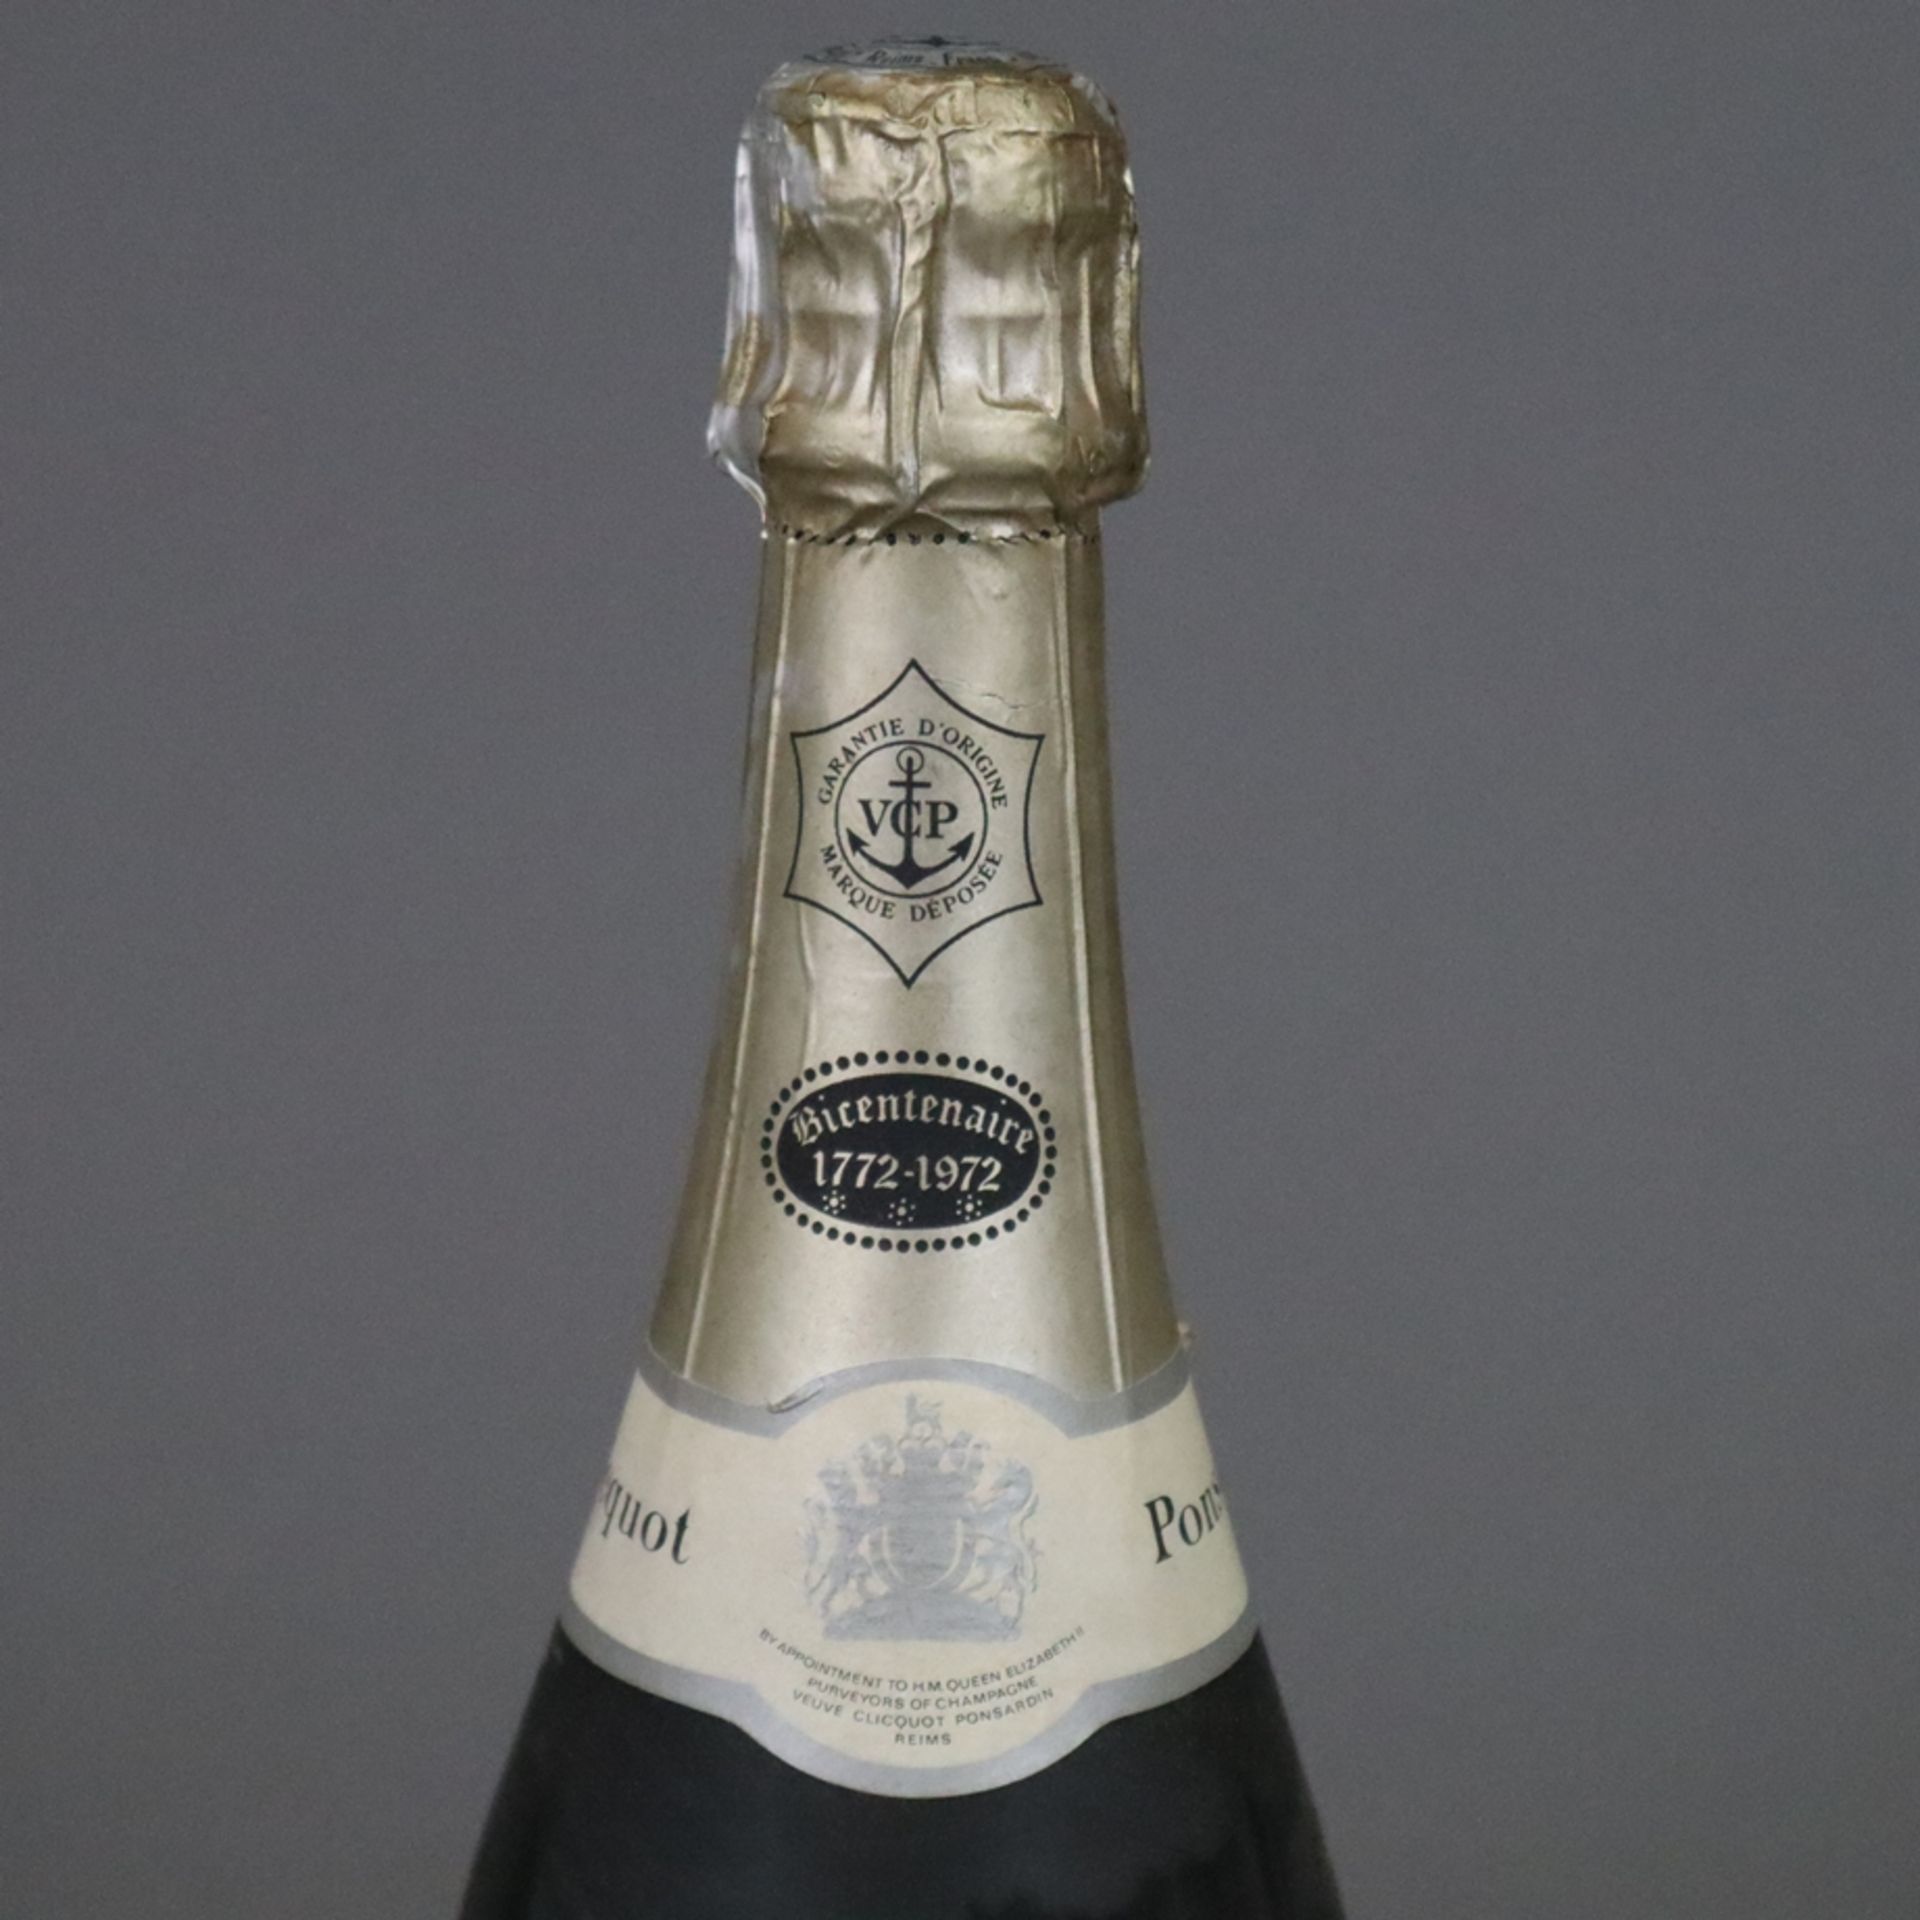 Champagner - Veuve Clicquot Ponsardin Bicentenaire 1772-1972 Brut, Reims, France, 750ml, Flasche ve - Image 2 of 5